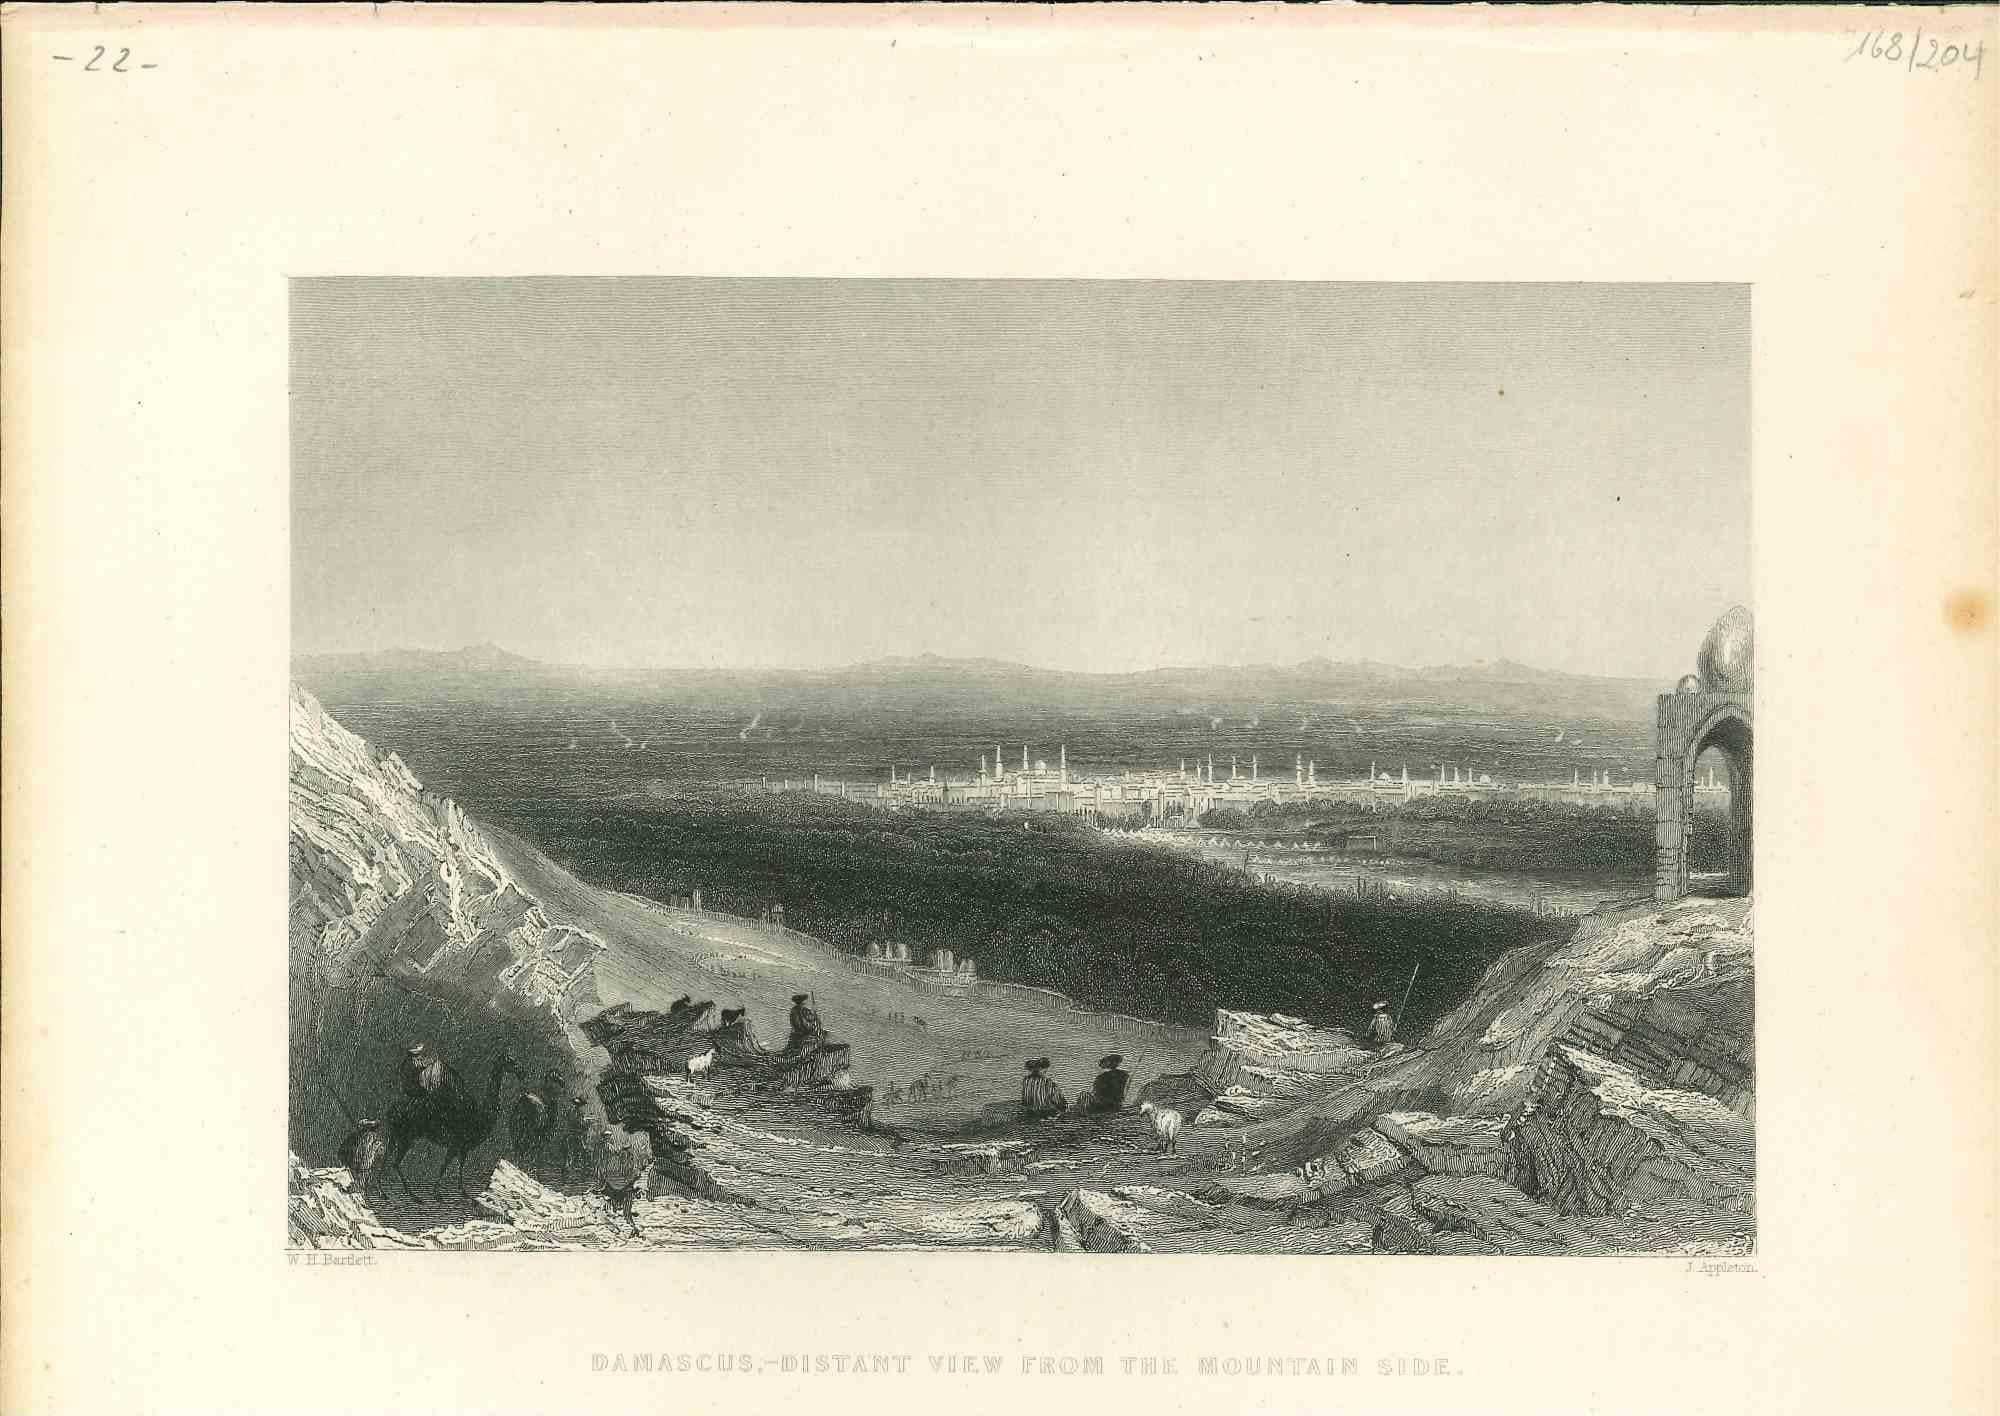 Unknown Landscape Print - Ancient View of Damascus - Original Lithograph - 1830s